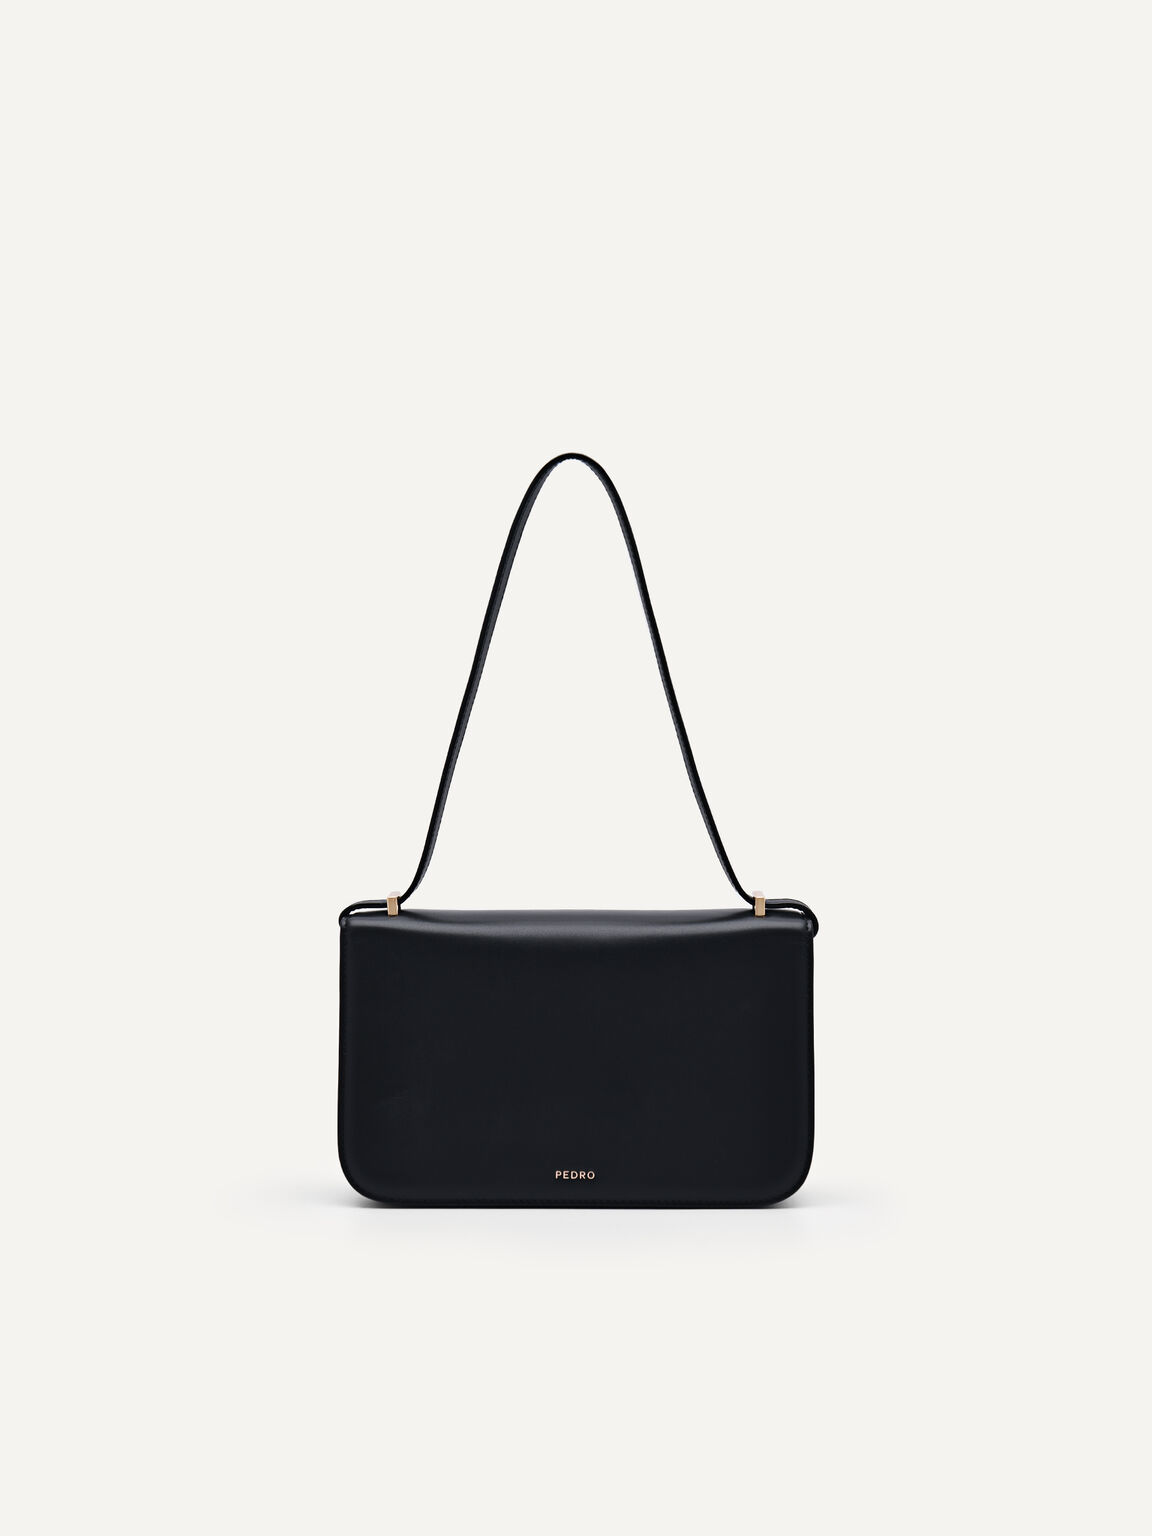 PEDRO Studio Kate Leather Envelope Bag, Black2, hi-res